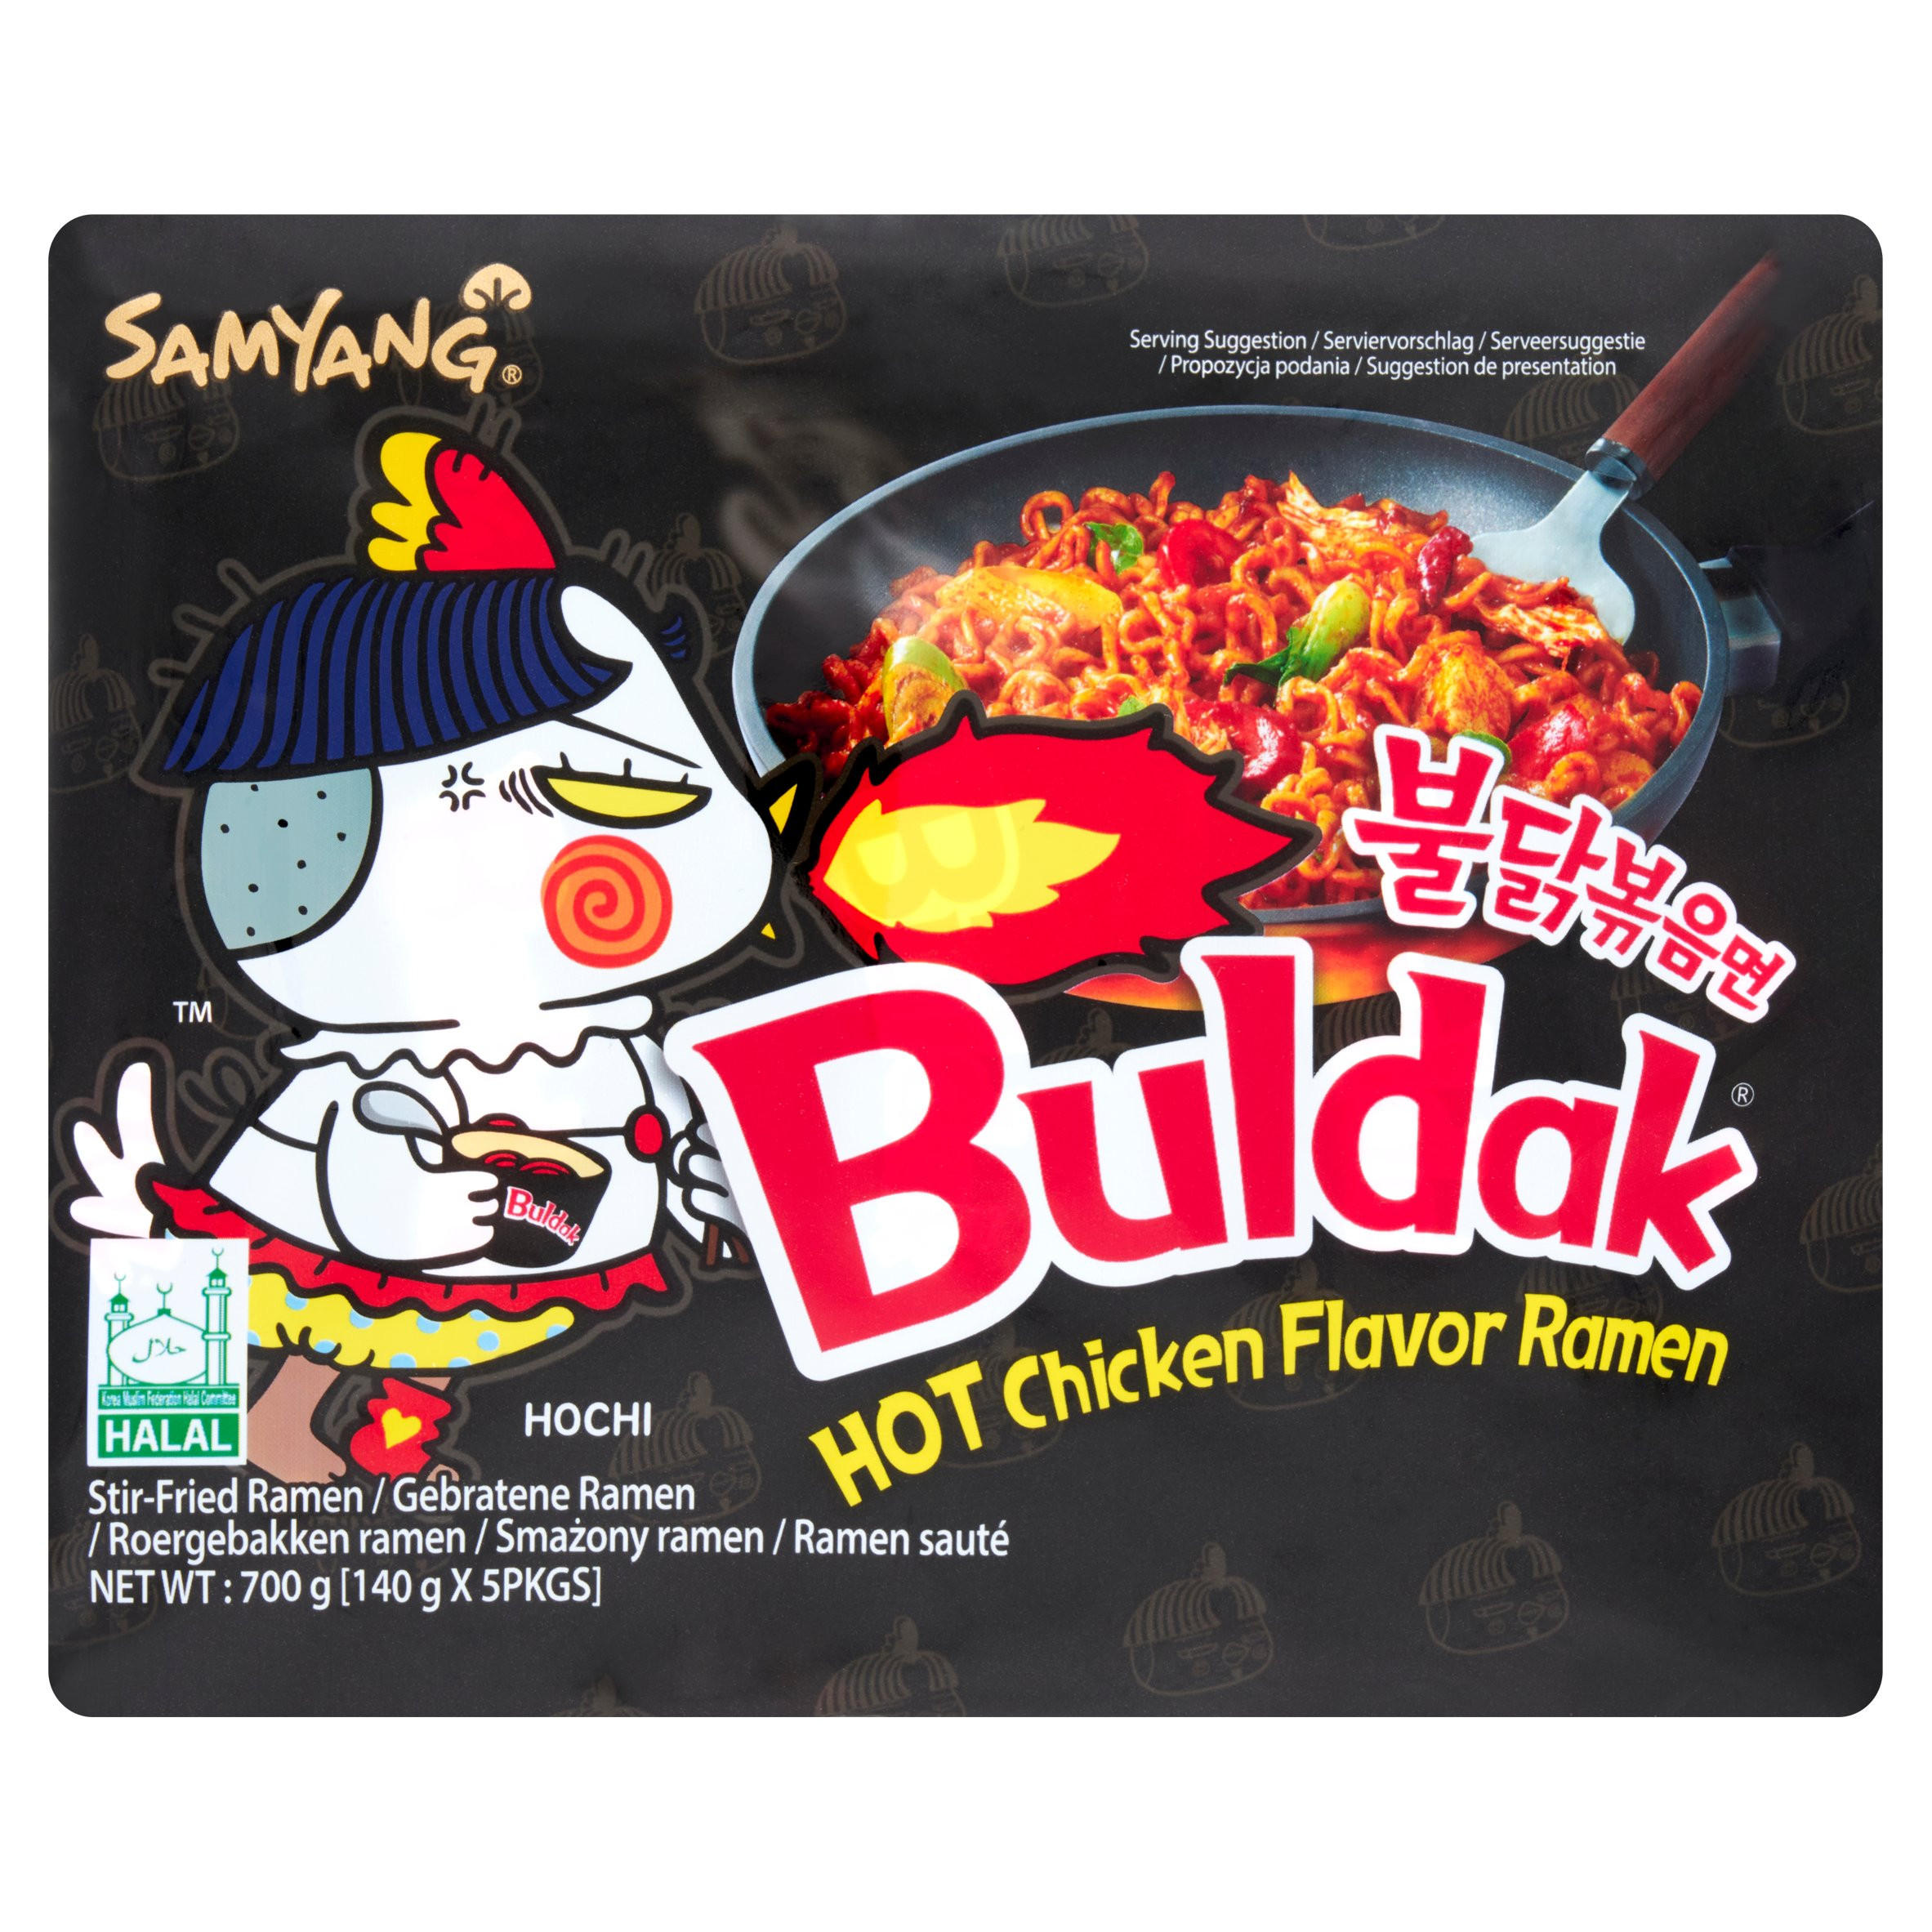 Samyang Buldak Hot Chicken Flavour Ramen 5 x 140g (700g), Noodles